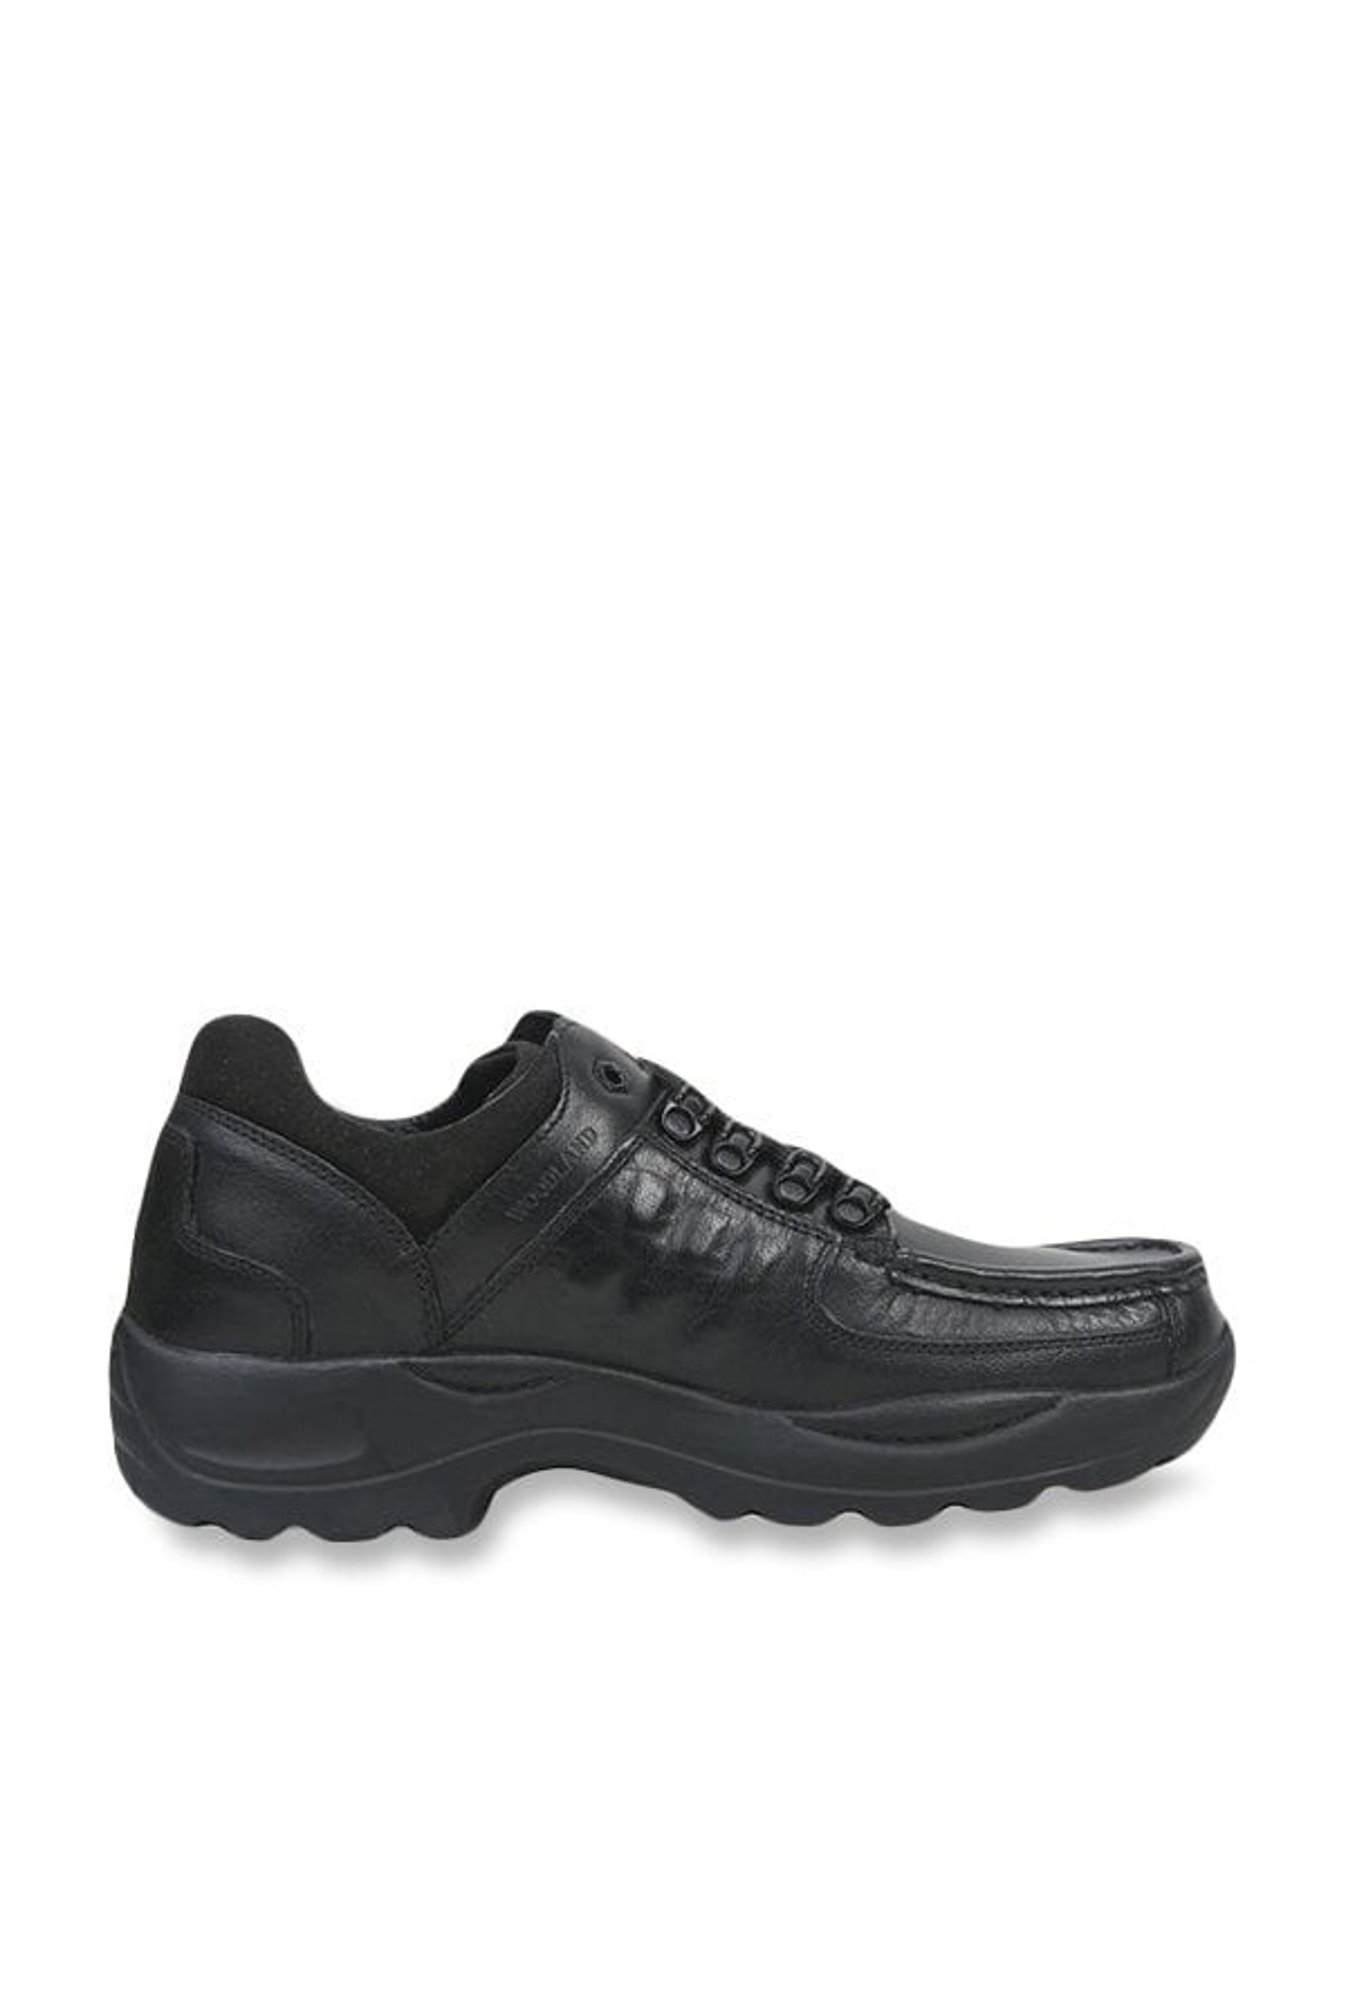 Geox Mcompass14 Fashion Sneaker,black Leather,40 Eu/7-7.5 M Us for Men |  Lyst